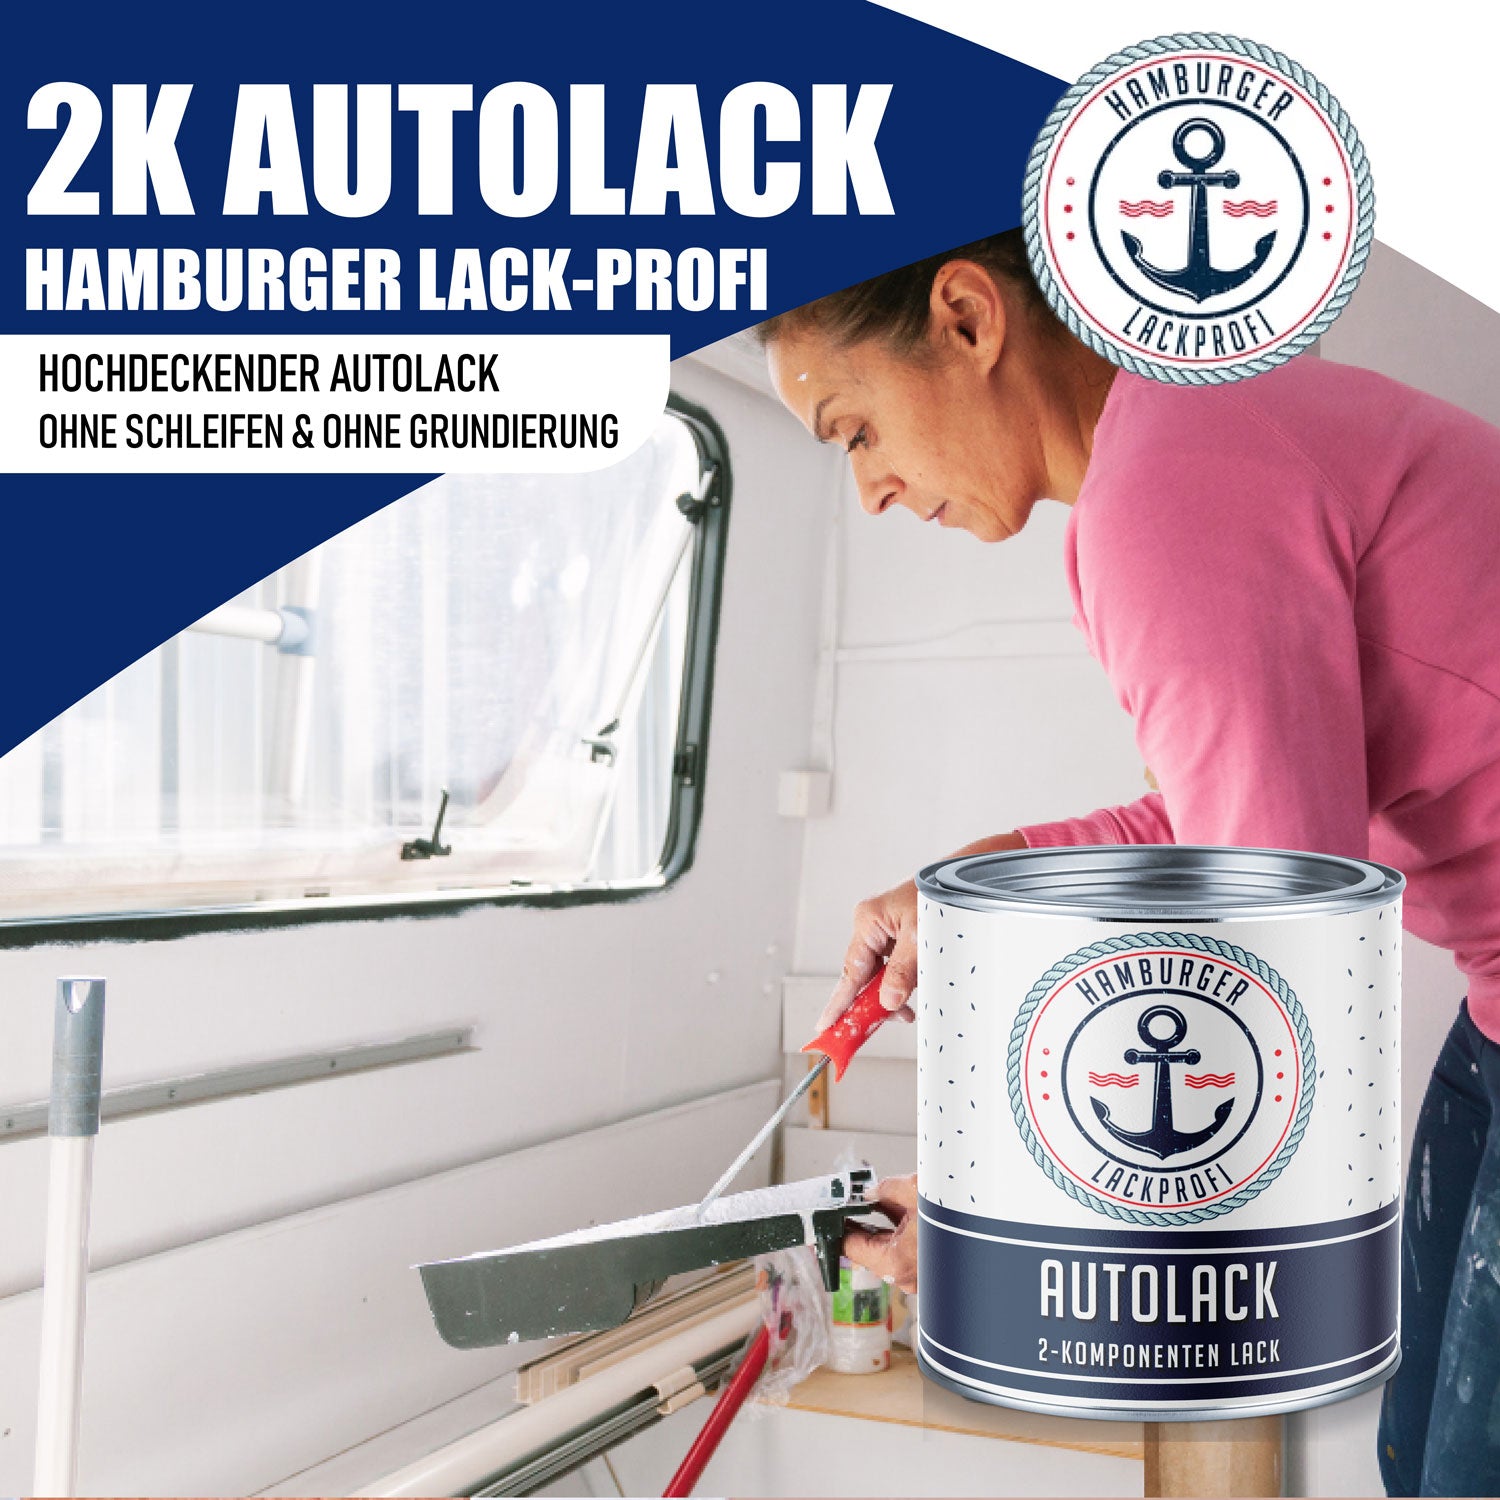 Hamburger Lack-Profi 2K Autolack in Khakigrau RAL 7008 mit Lackierset (X300) & Verdünnung (1 L) - 30% Sparangebot